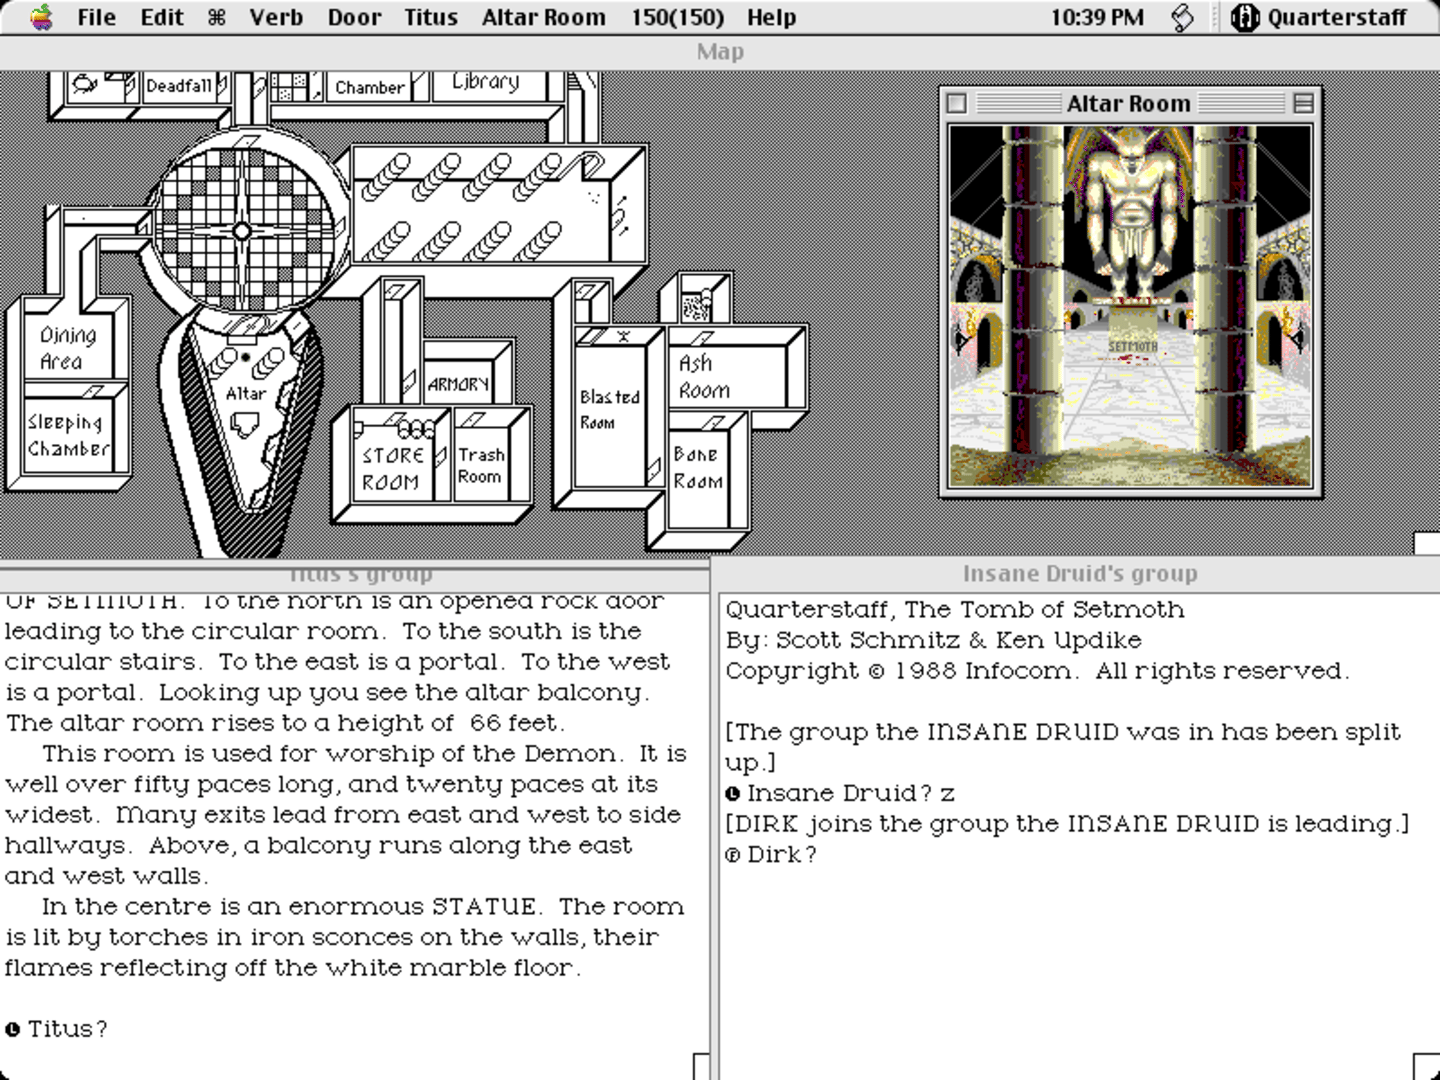 Quarterstaff: The Tomb of Setmoth screenshot